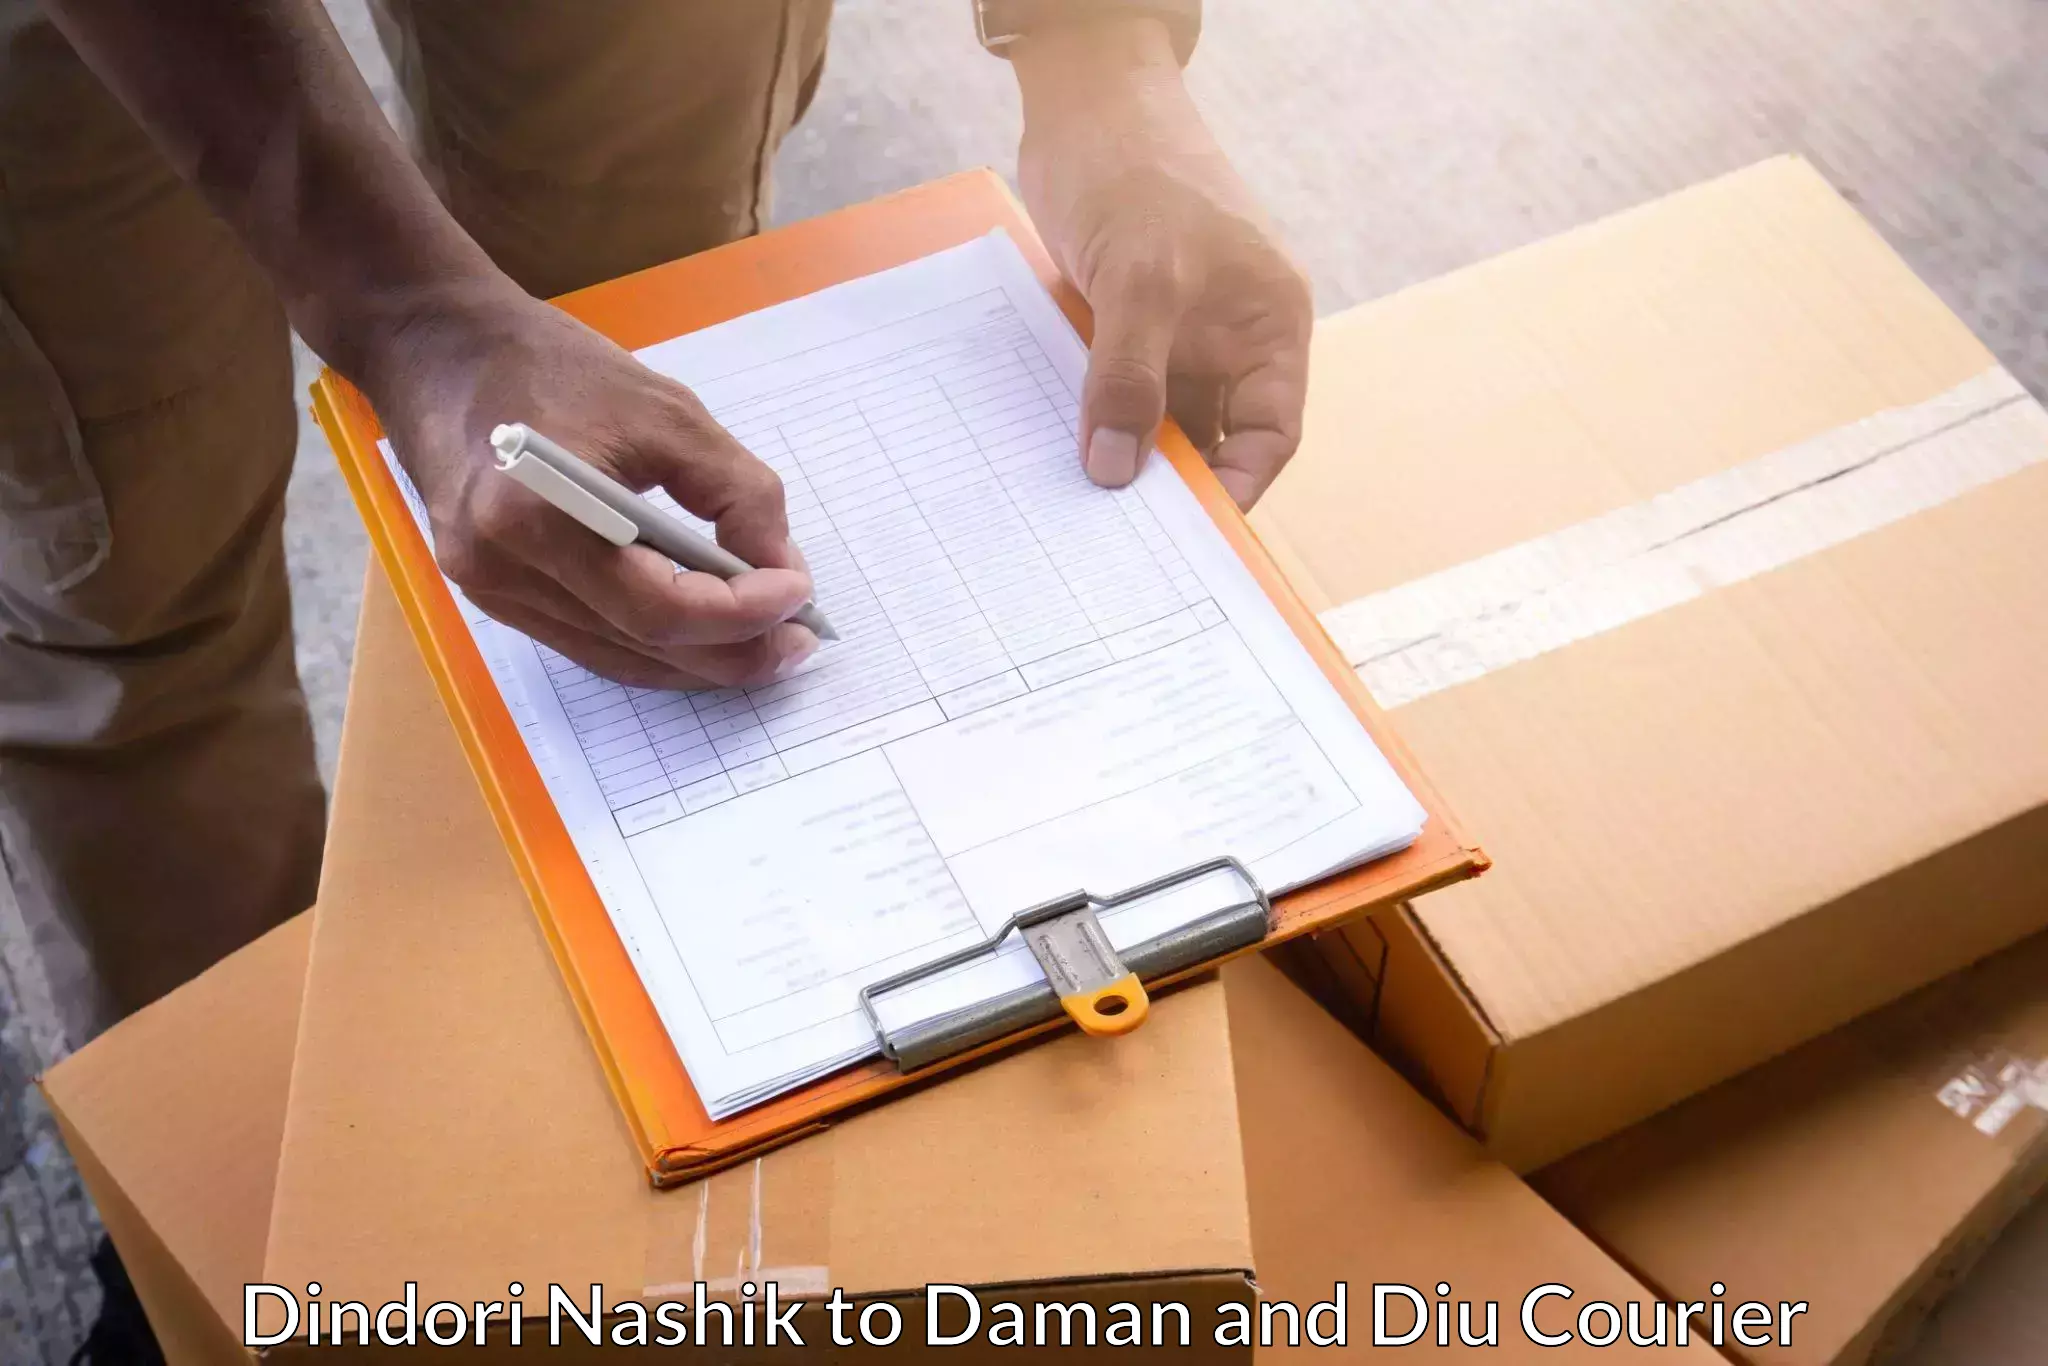 Courier insurance in Dindori Nashik to Diu